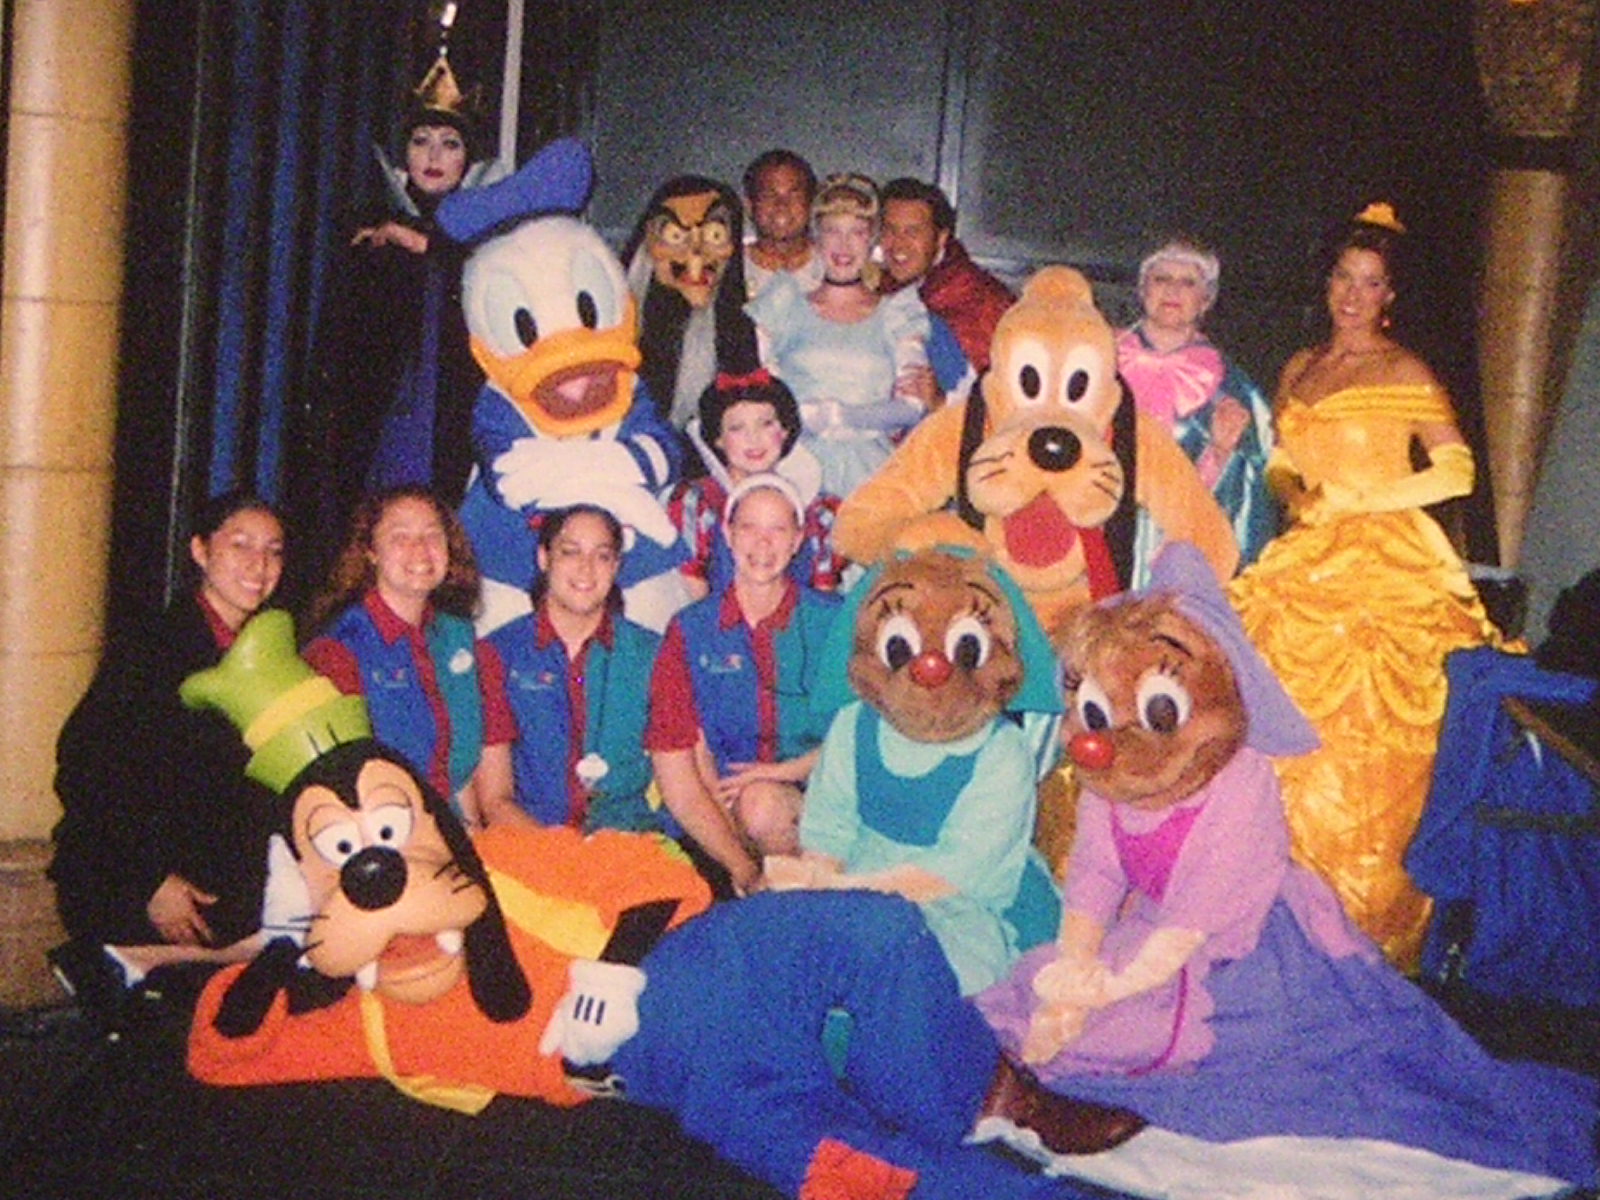 My Walt Disney World College Program Experience: Still Worth it 11 Years Later